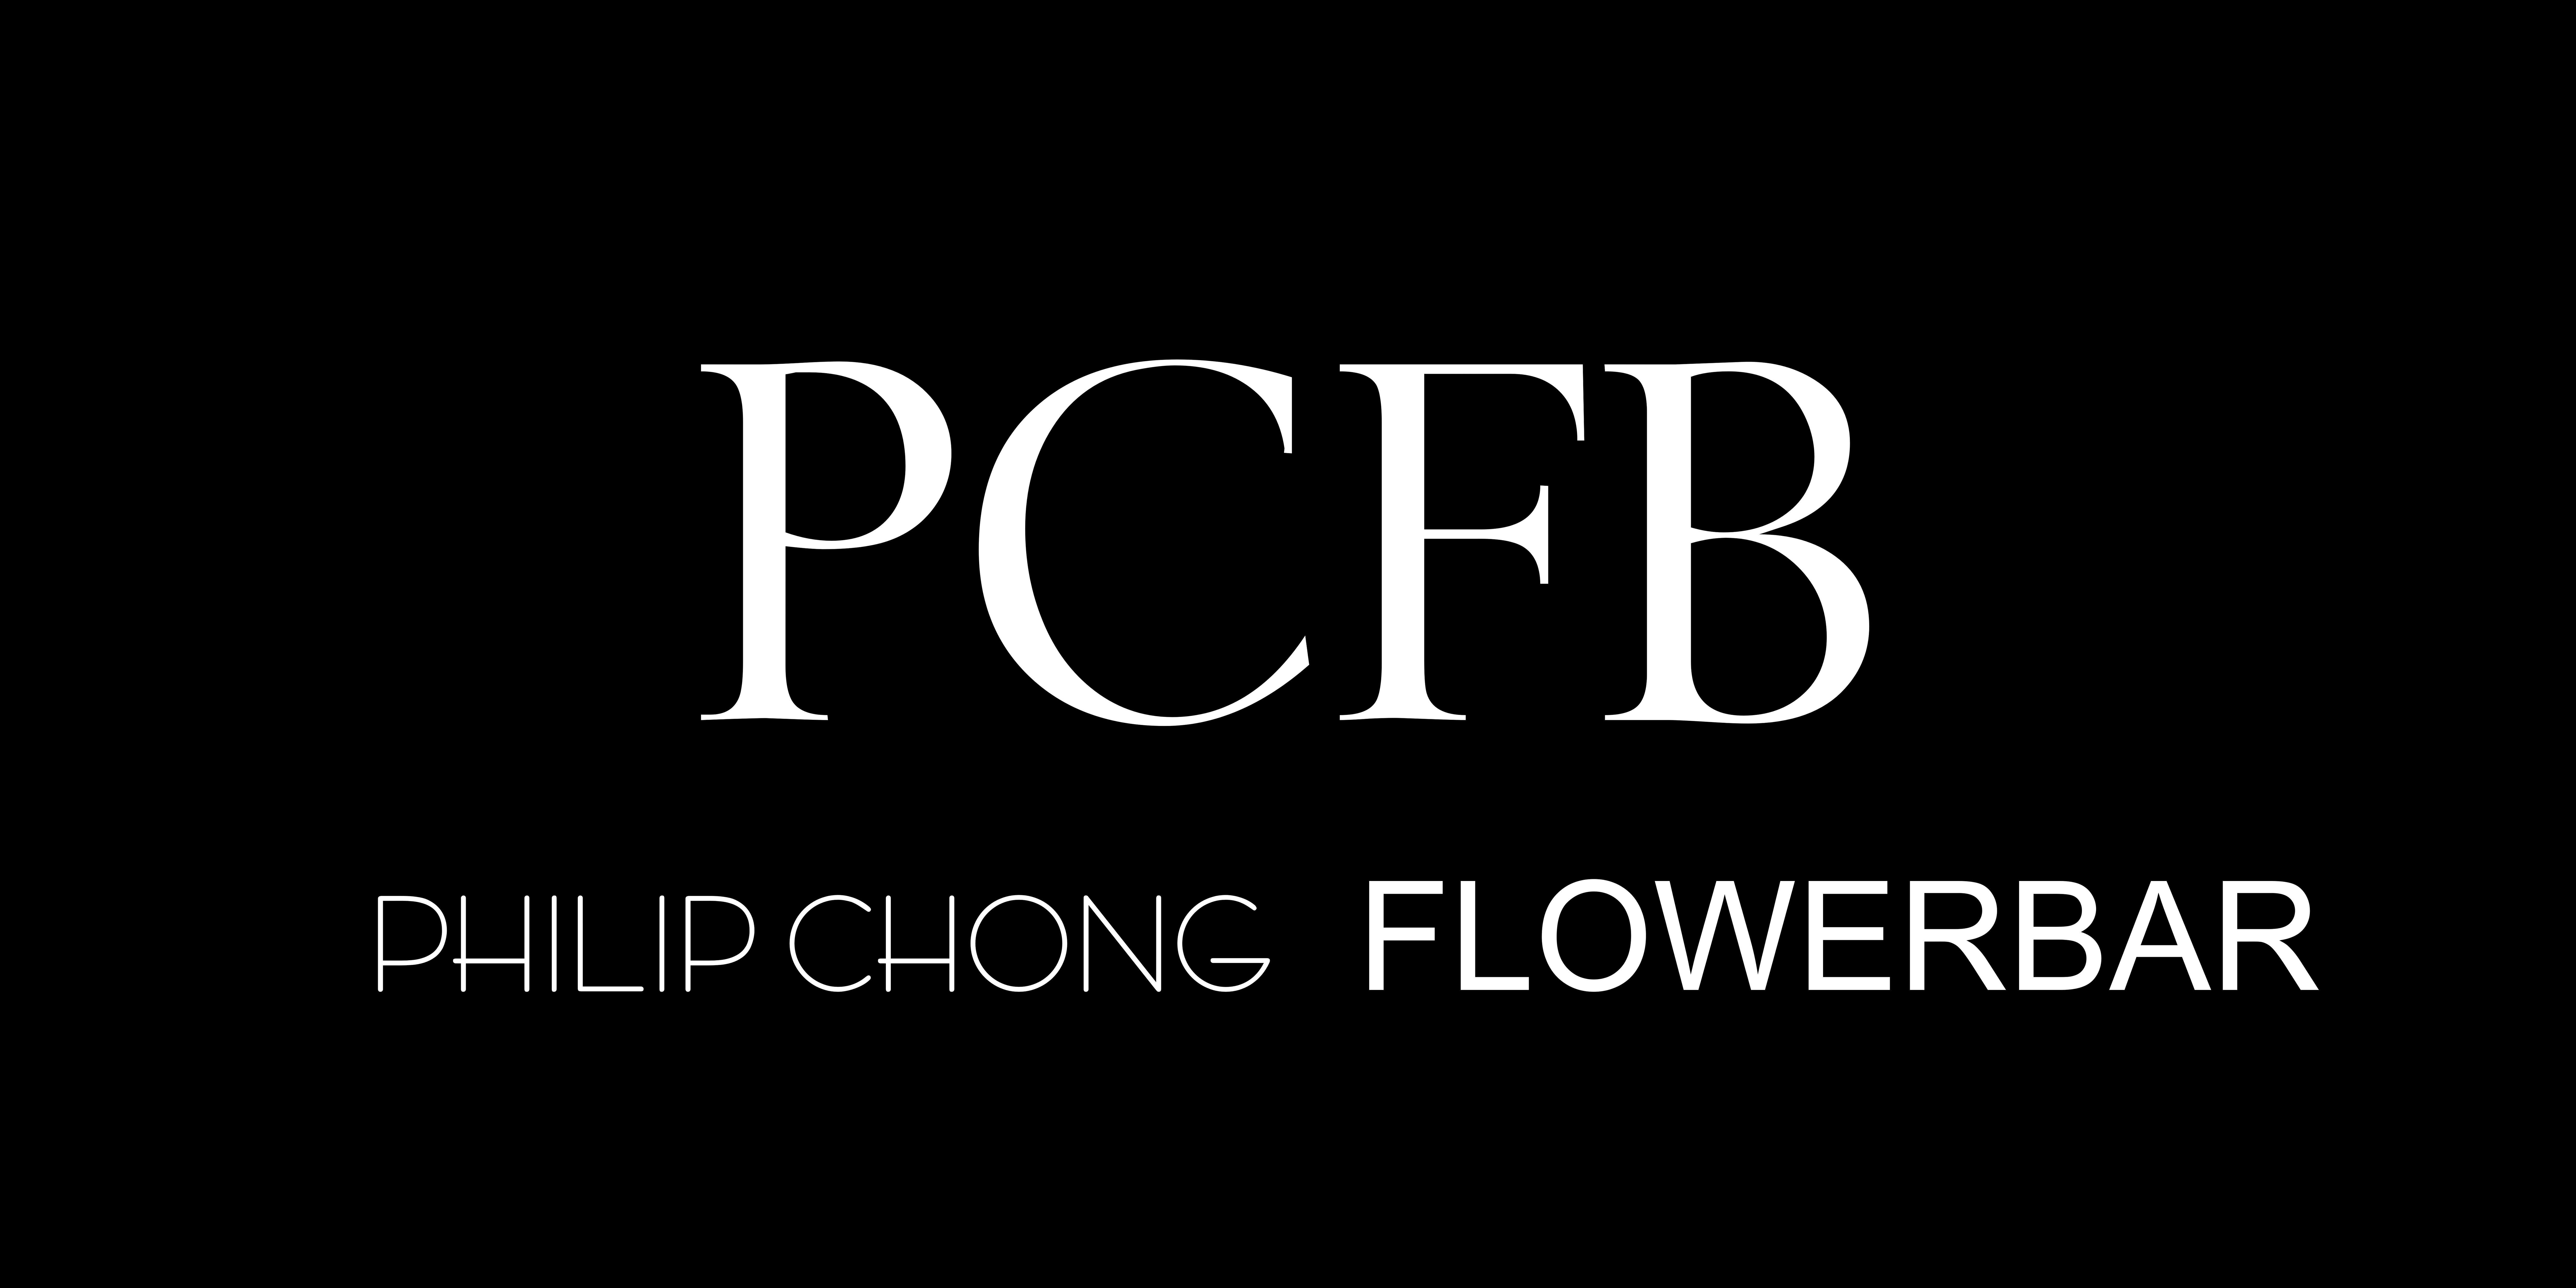 Philip Chong Flower Bar